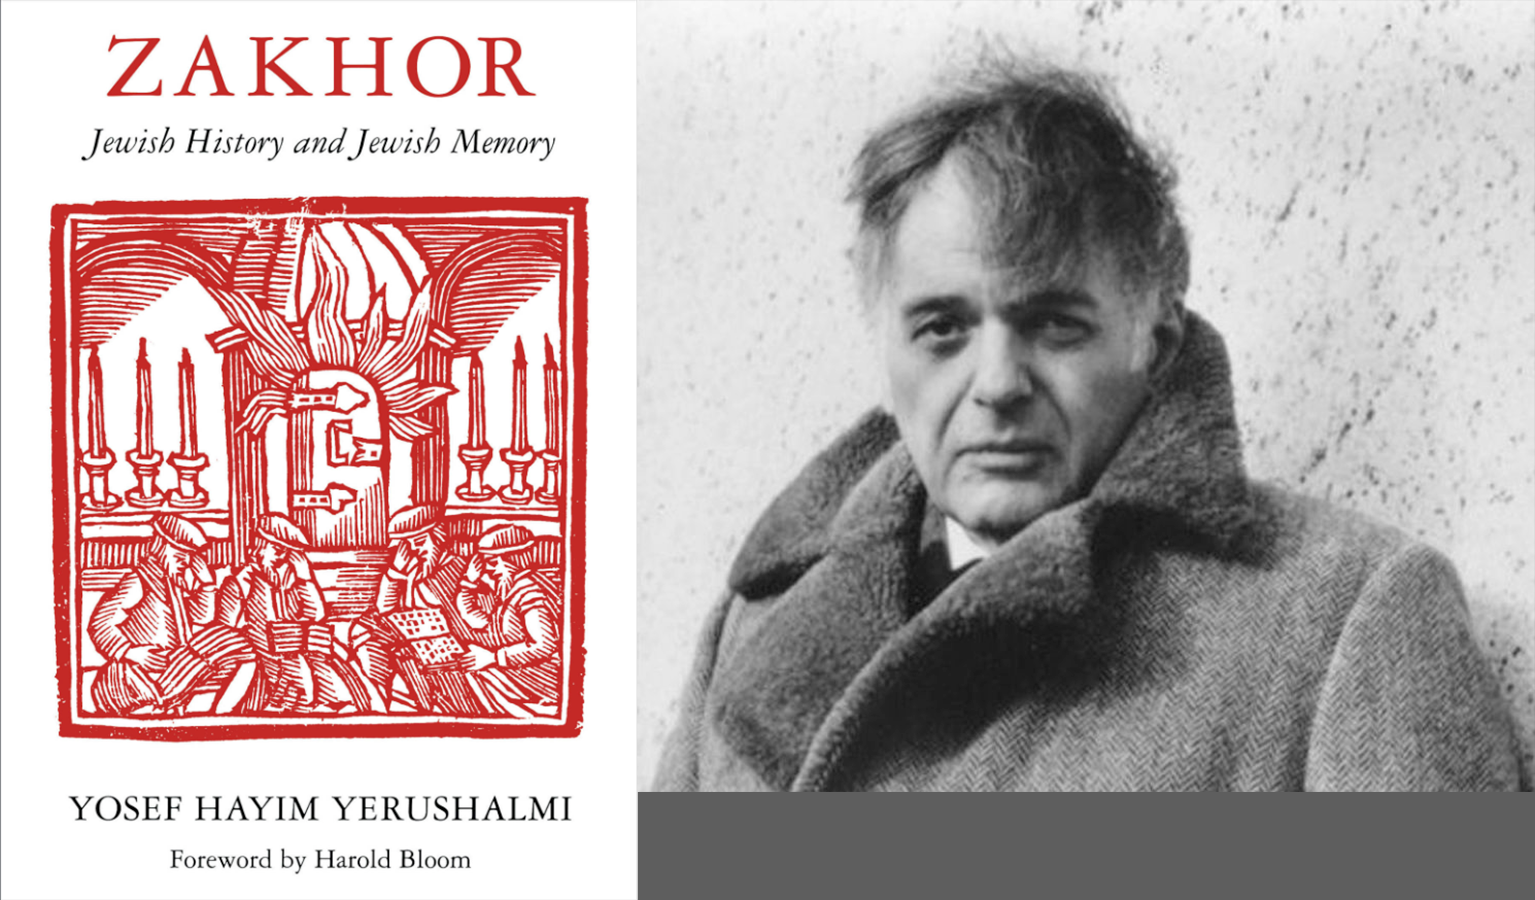 "Zakhor" Jewish History and Jewish Memory book cover next to B&W portrait of author Yosef Hayim Yerushalmi